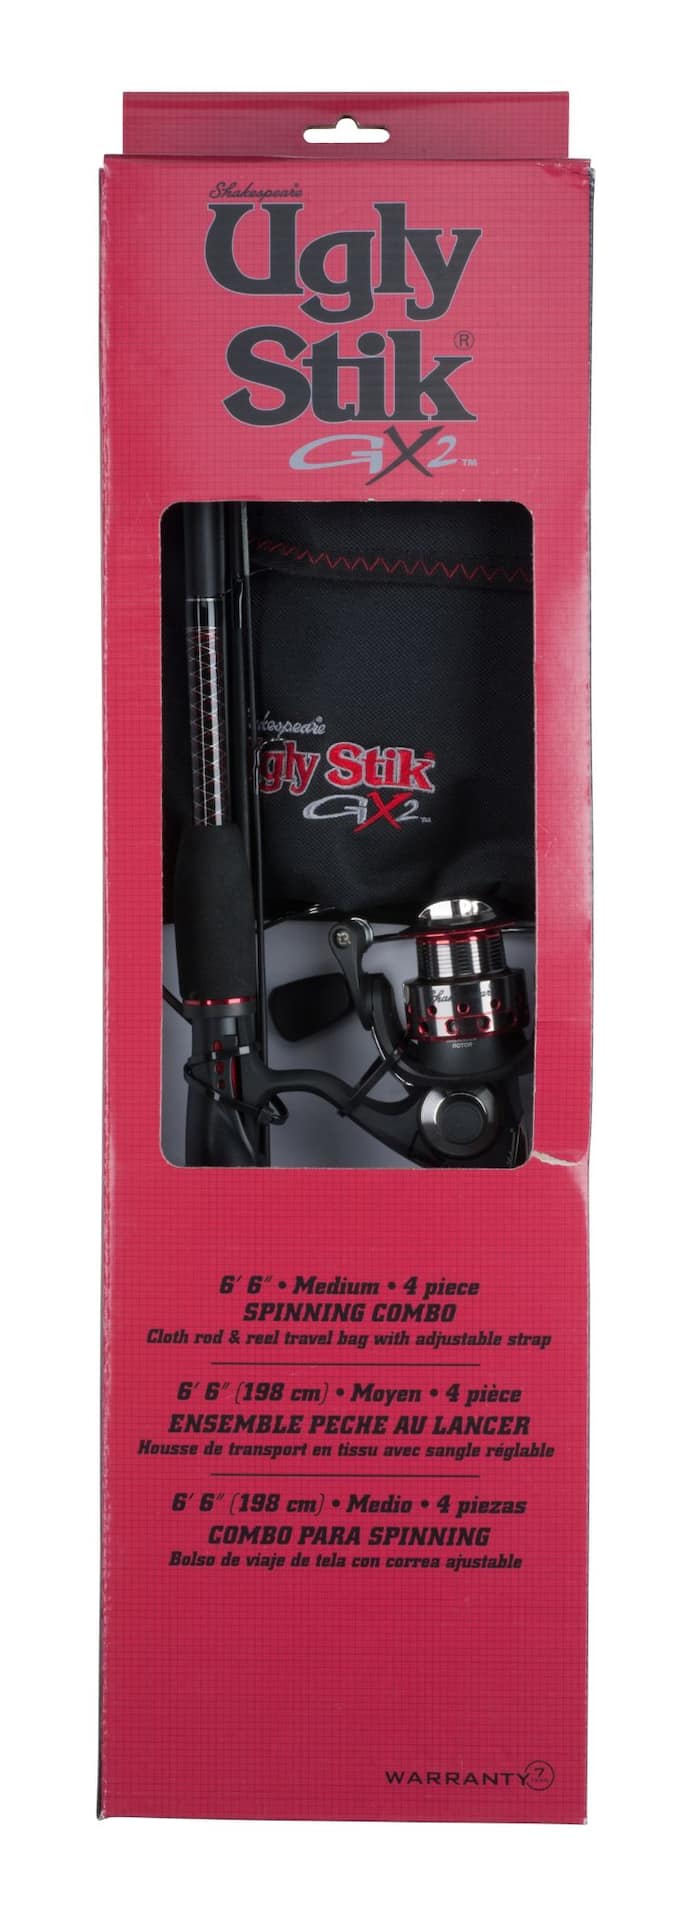 Ugly Stik GX2 Travel Spinning Fishing Rod and Reel Combo, Medium, 6.6-ft,  4-pc